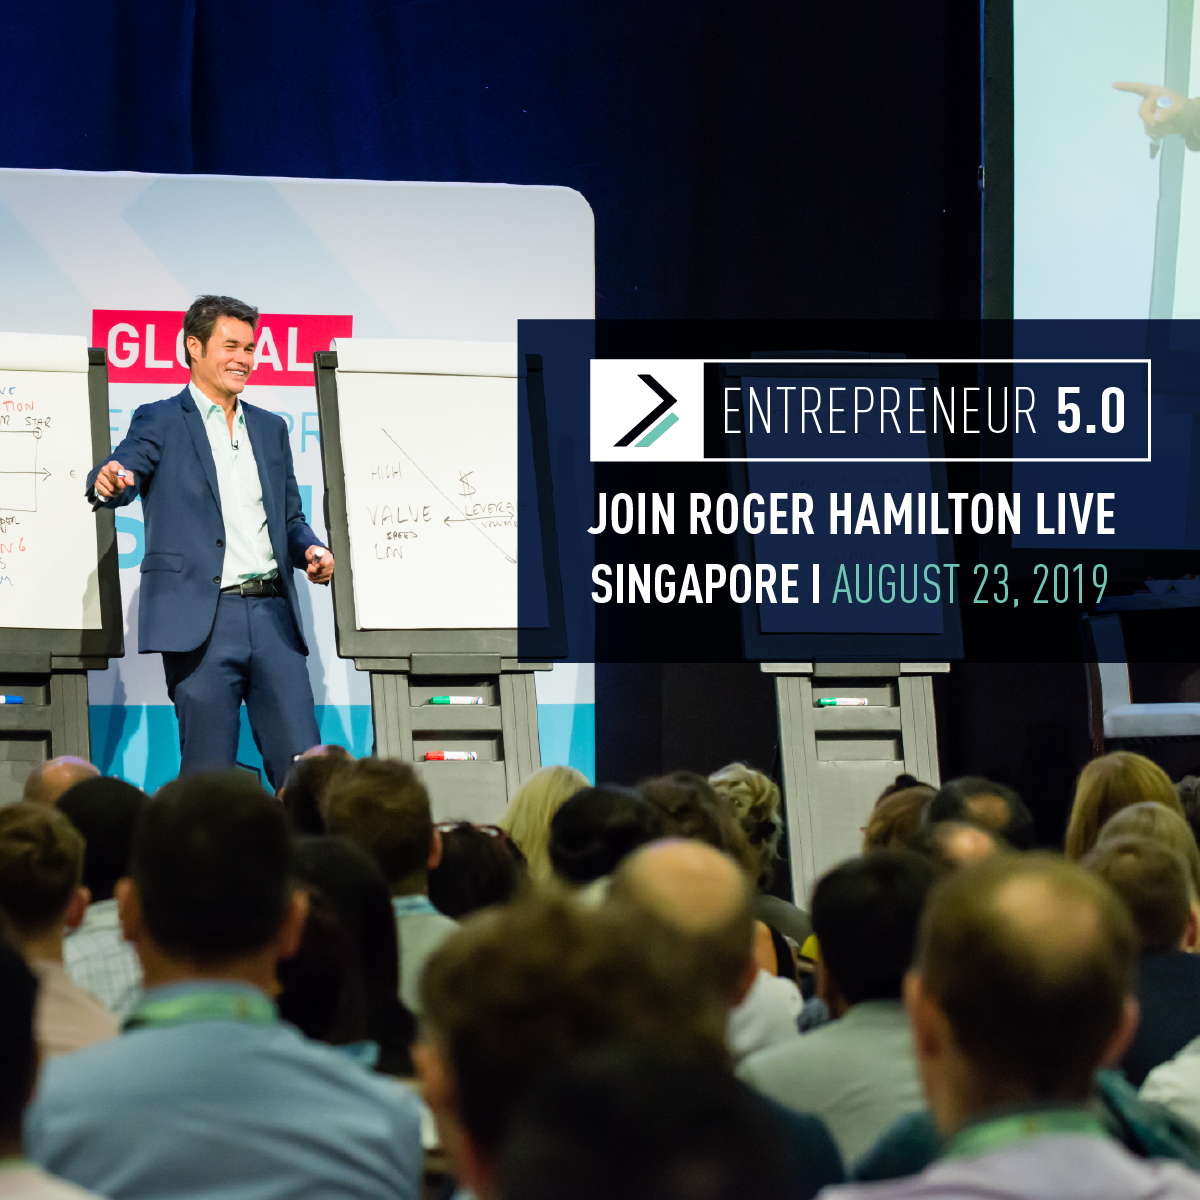 Singapore Entrepreneur 5.0, Singapore